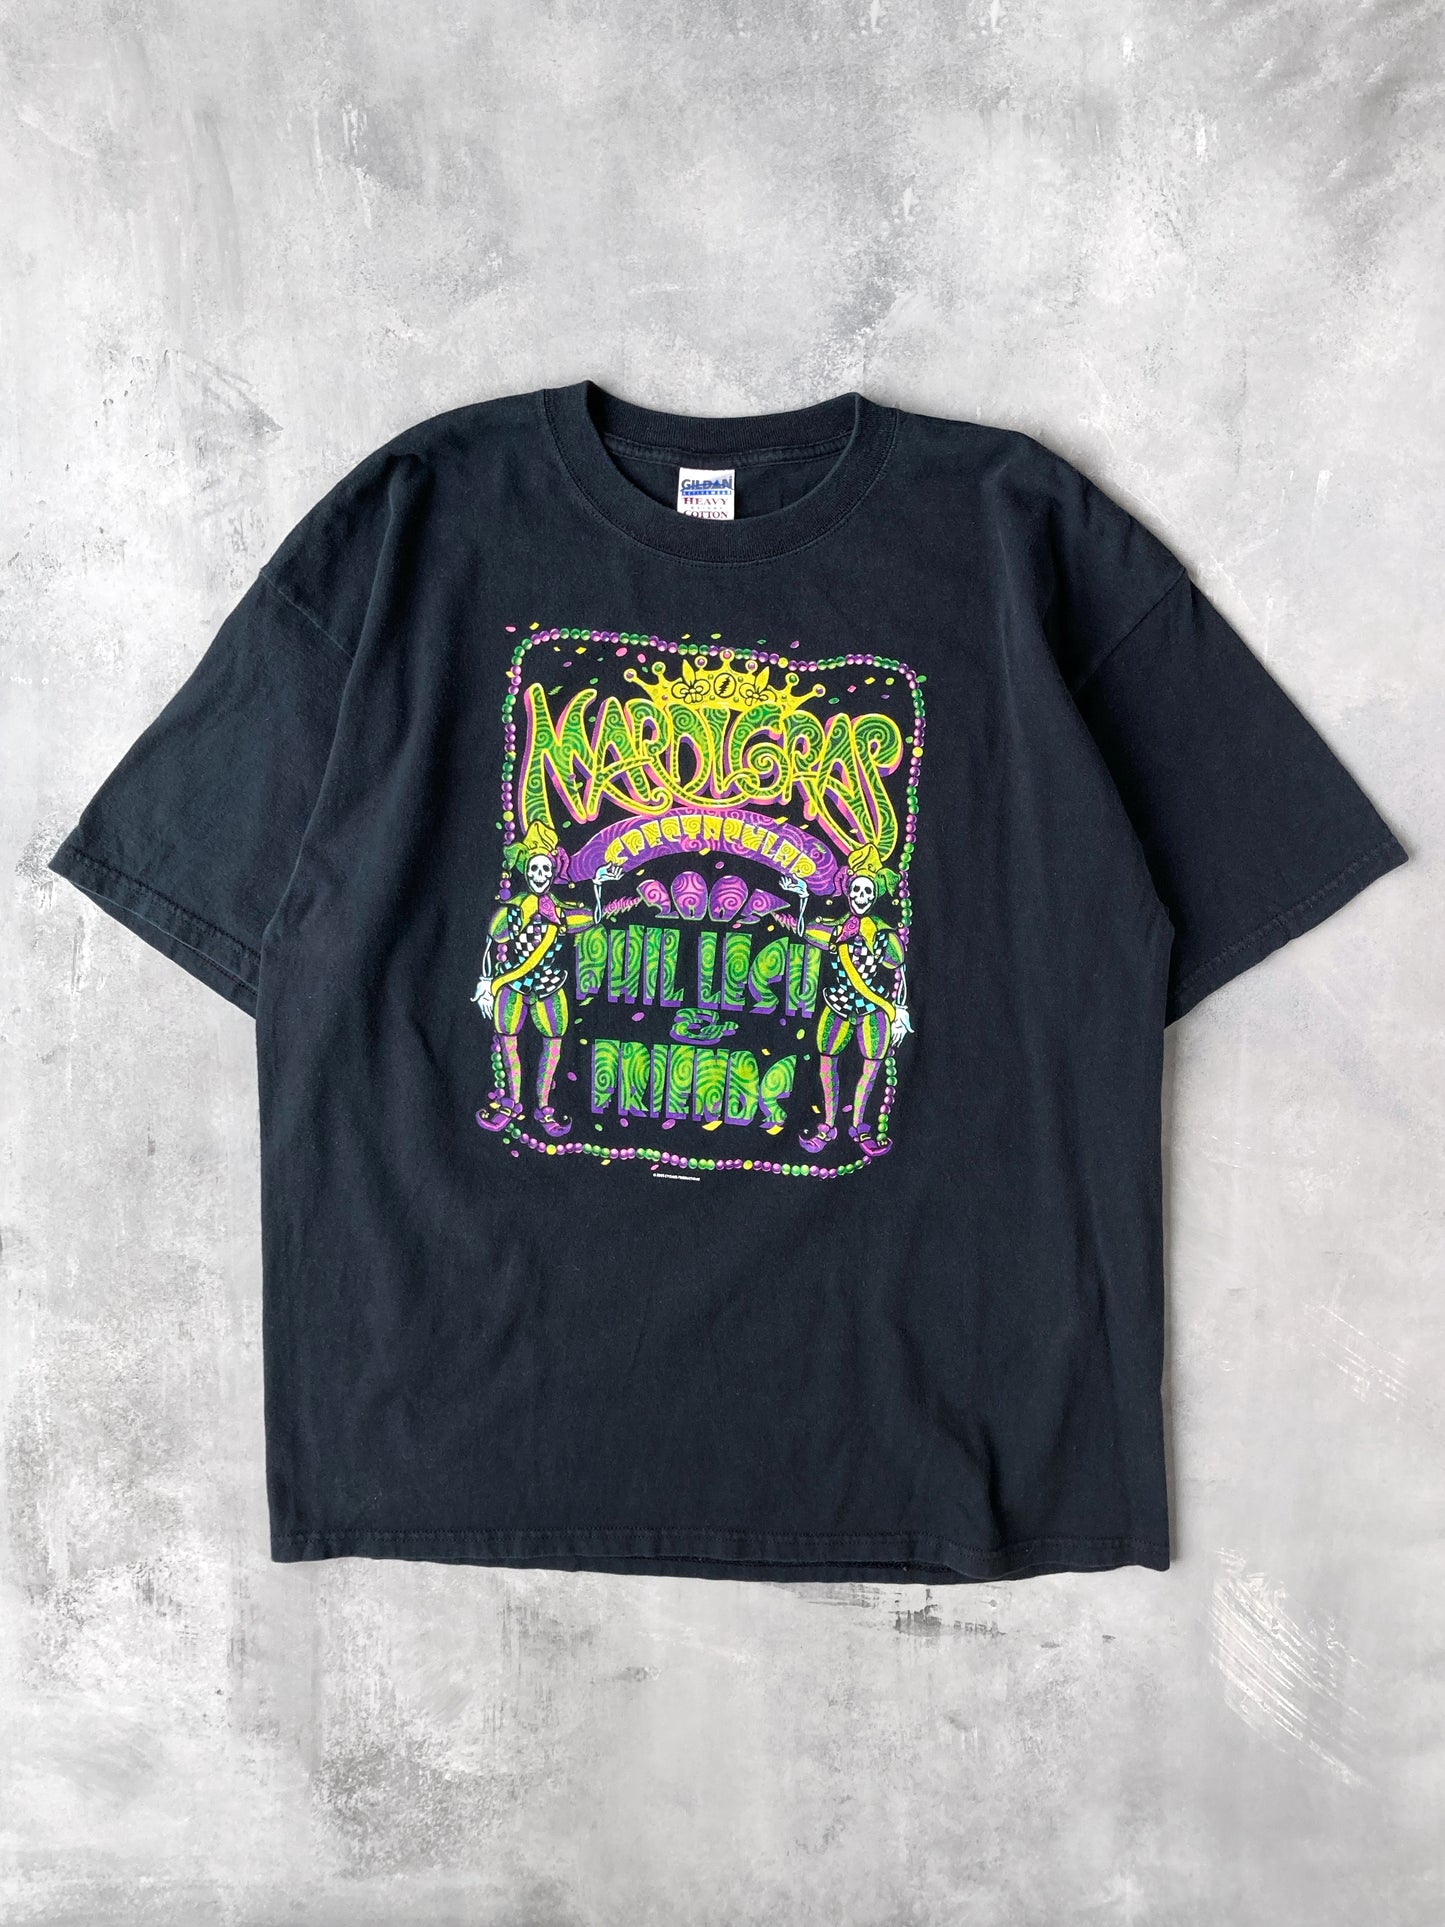 Phil Lesh & Friends Mardi Gras Spectacular T-Shirt '05 - XL